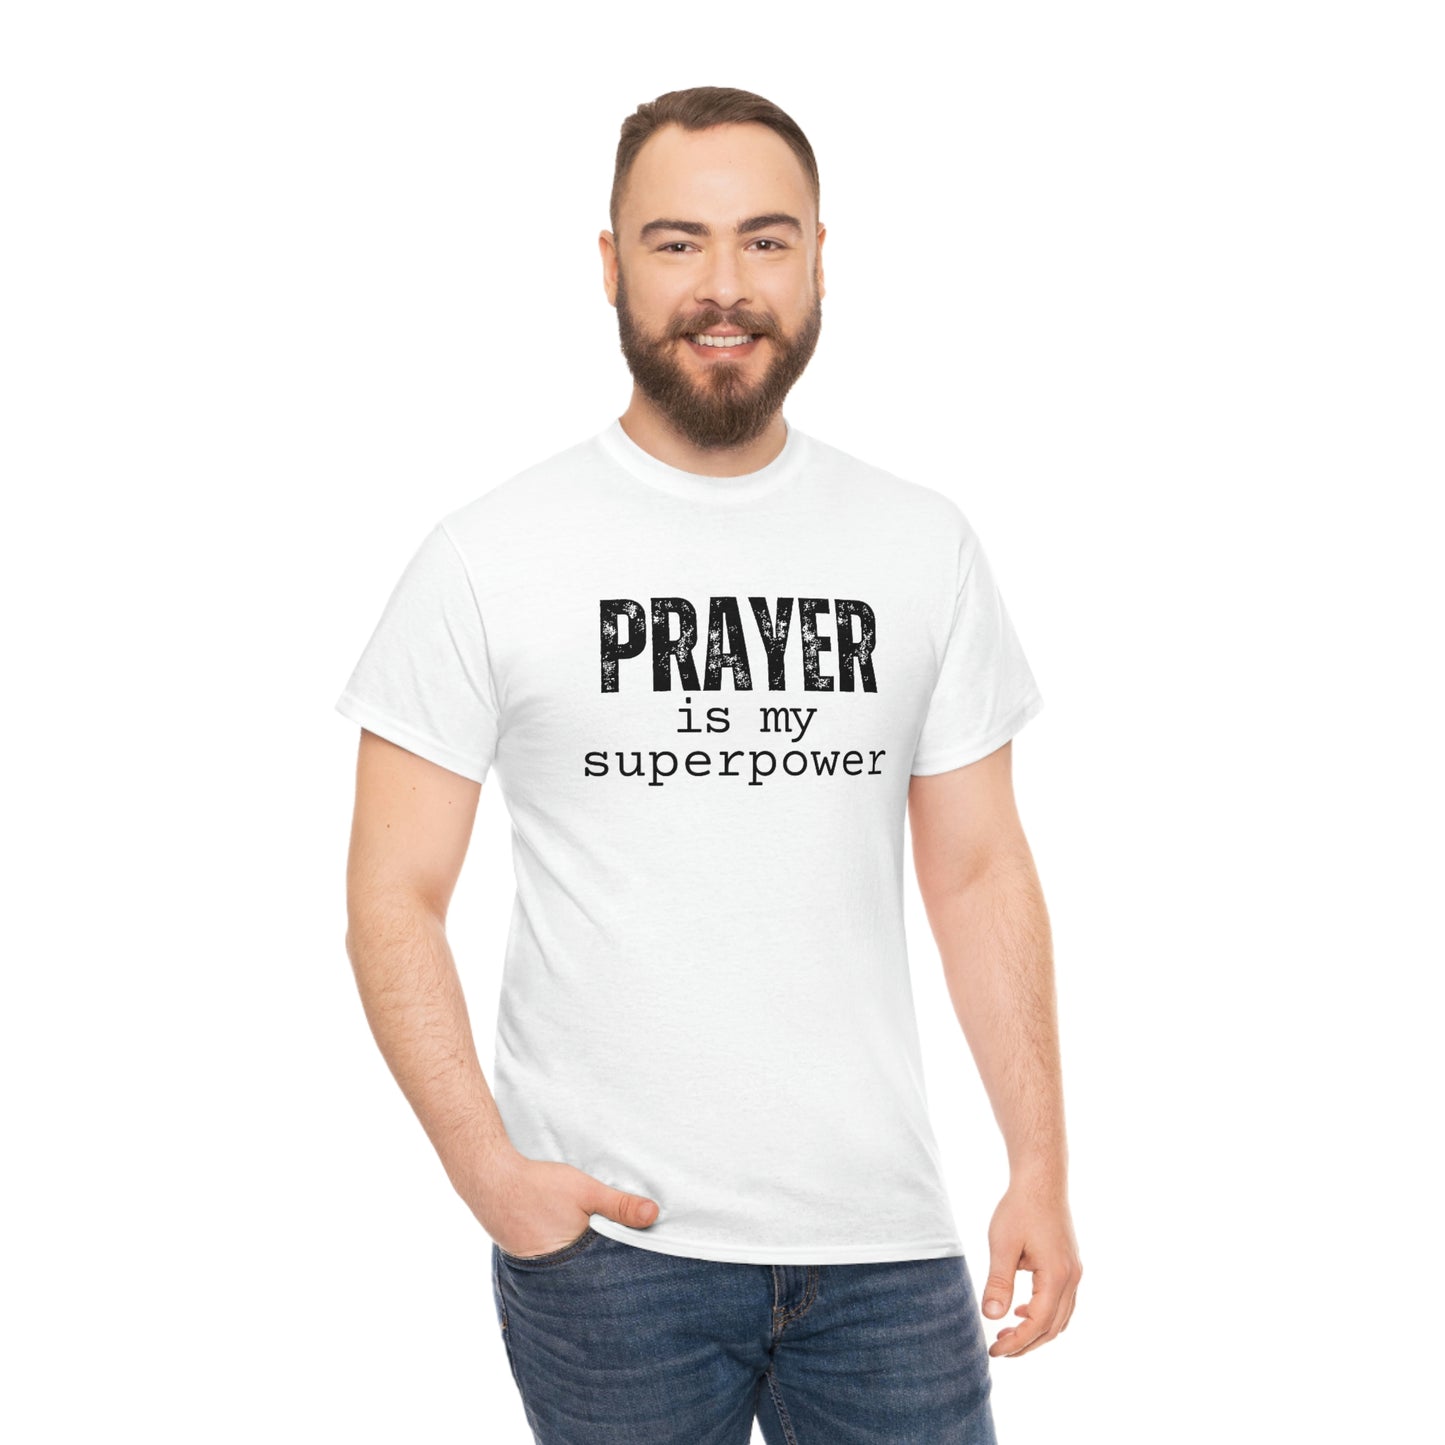 Prayer is My Superpower, Unisex T-Shirt, Faith Based, Christian Streetwear